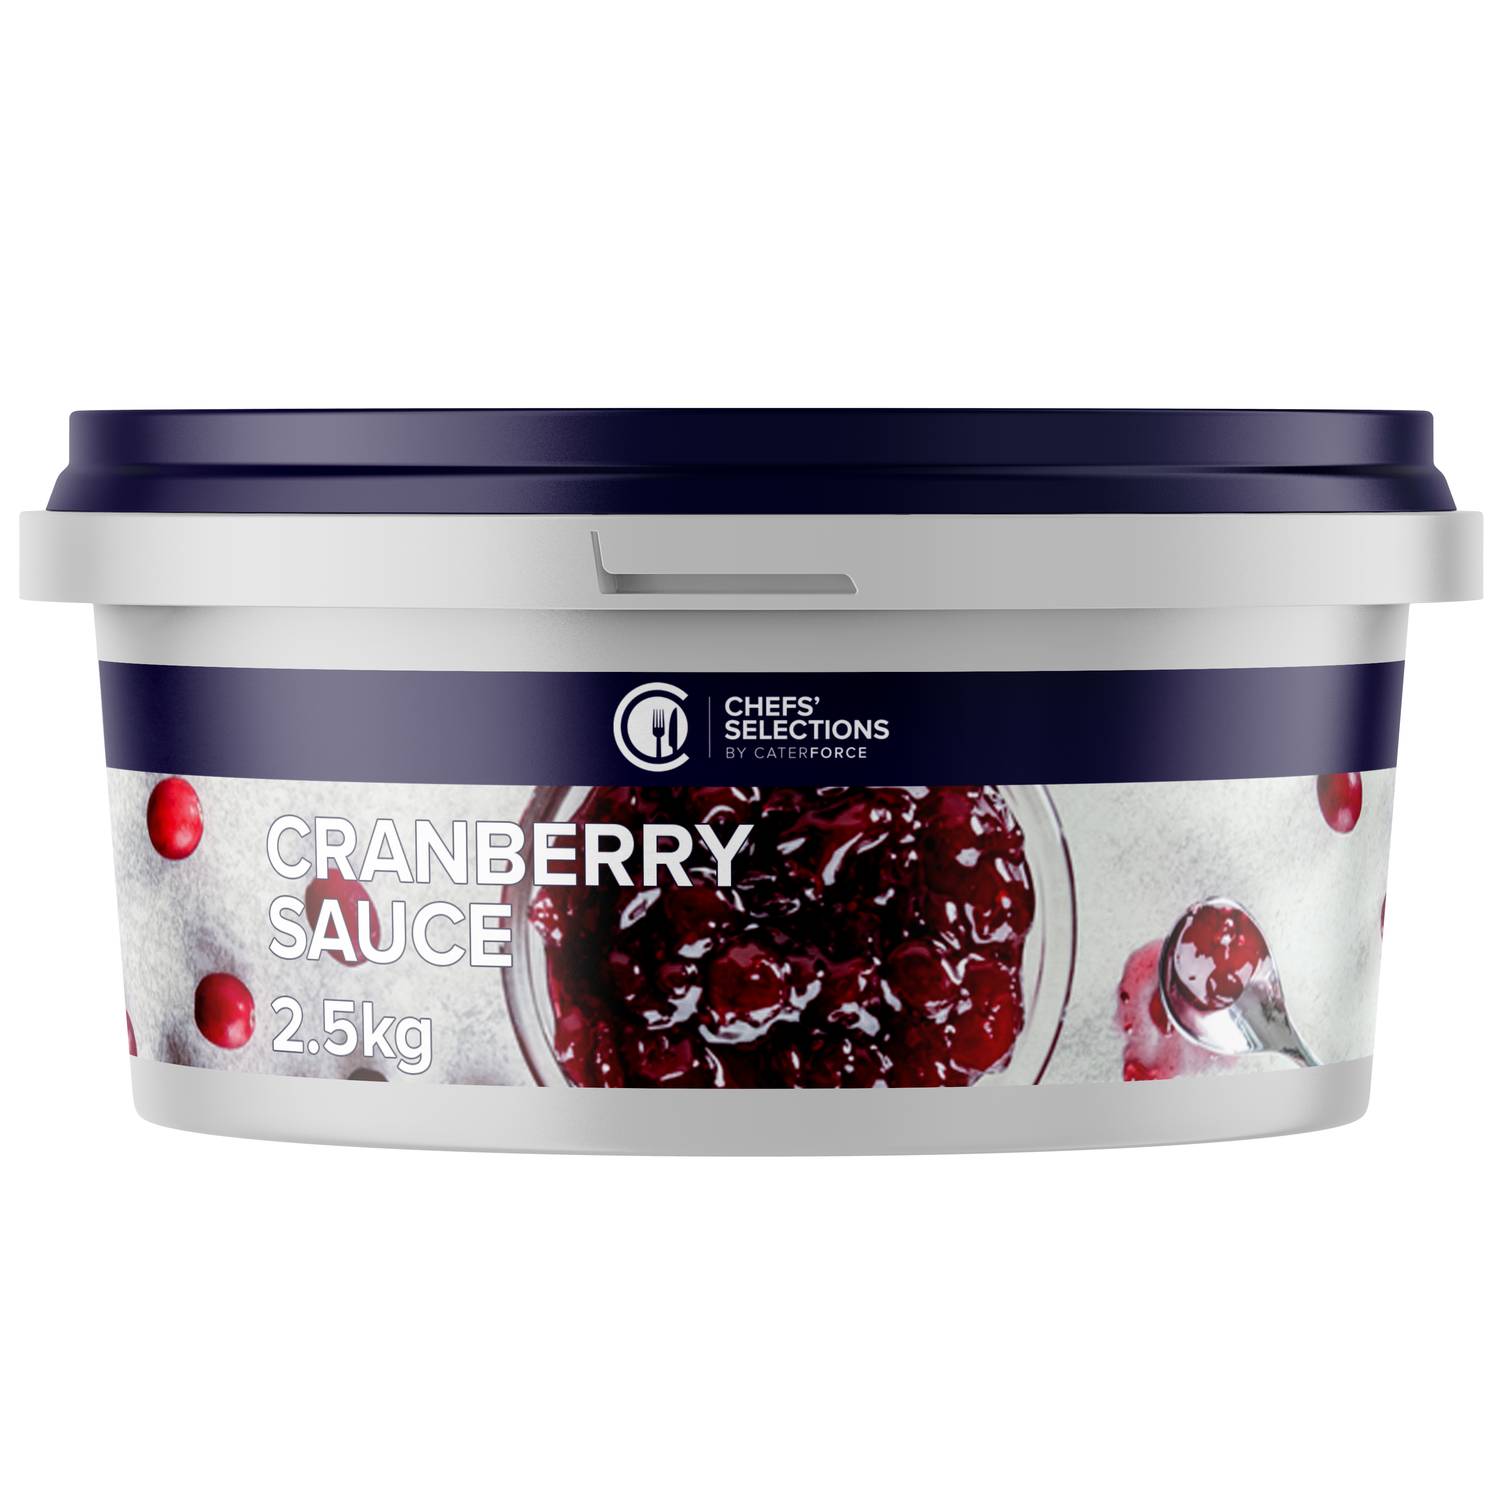 Chefs’ Selections Cranberry Sauce (4 x 2.5kg)